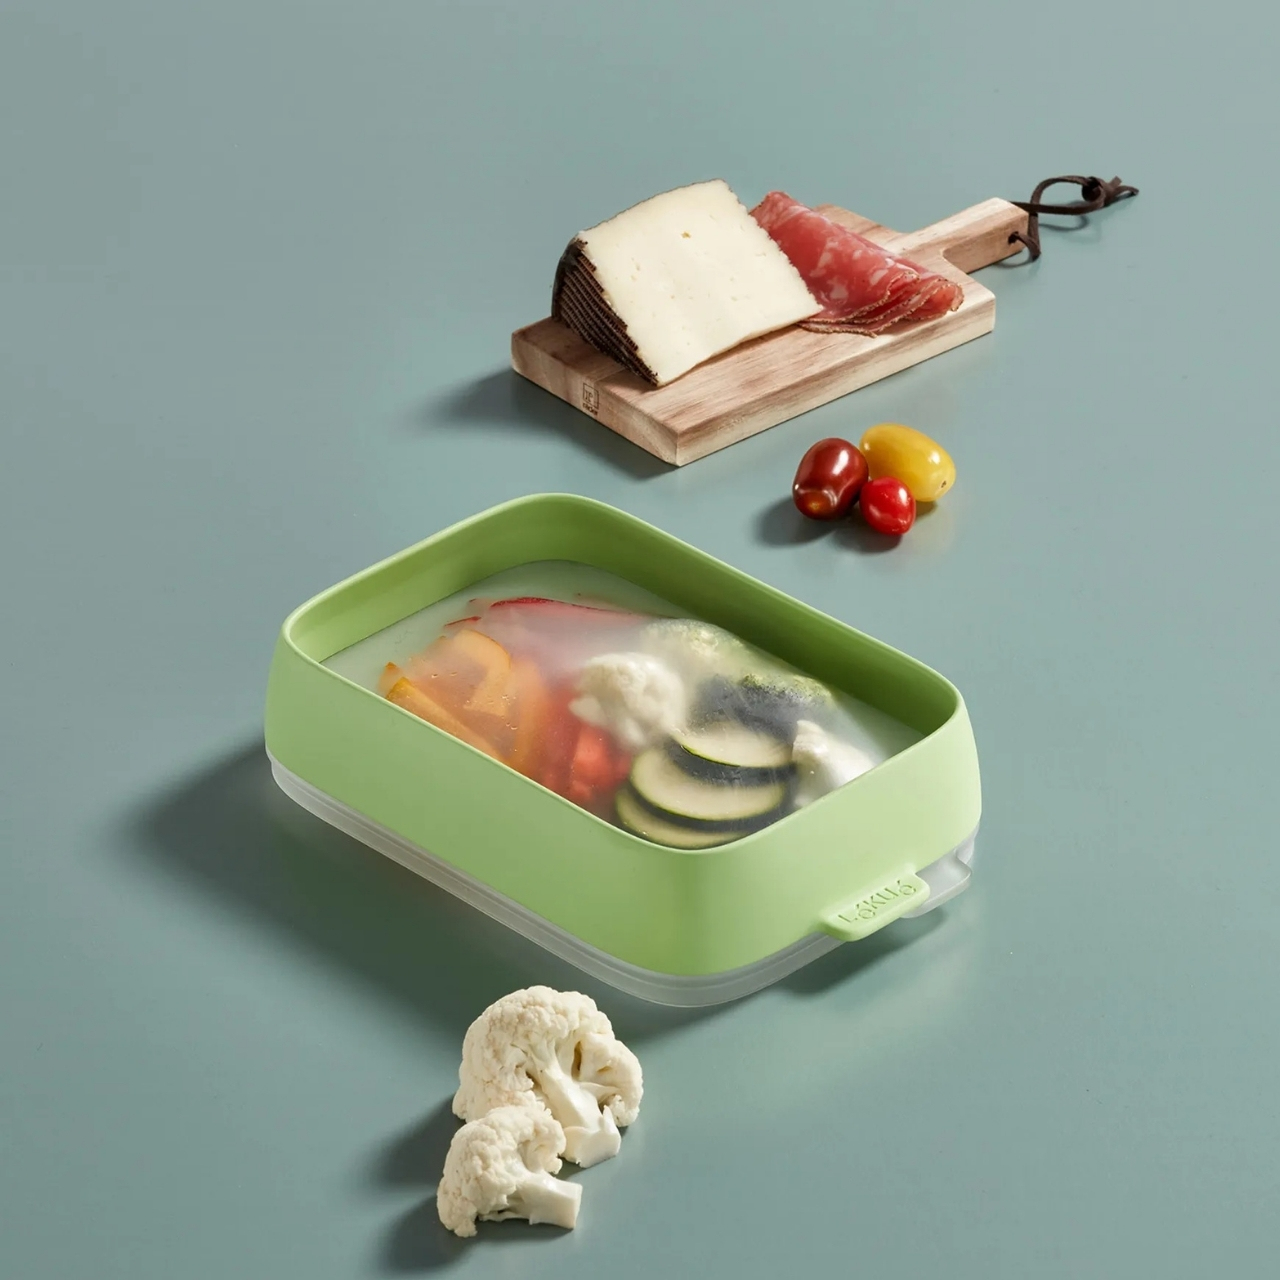 https://www.yankodesign.com/images/design_news/2022/07/reusable-seal-tray-helps-keep-veggies-fresh-and-reduce-single-use-plastic/3.jpg